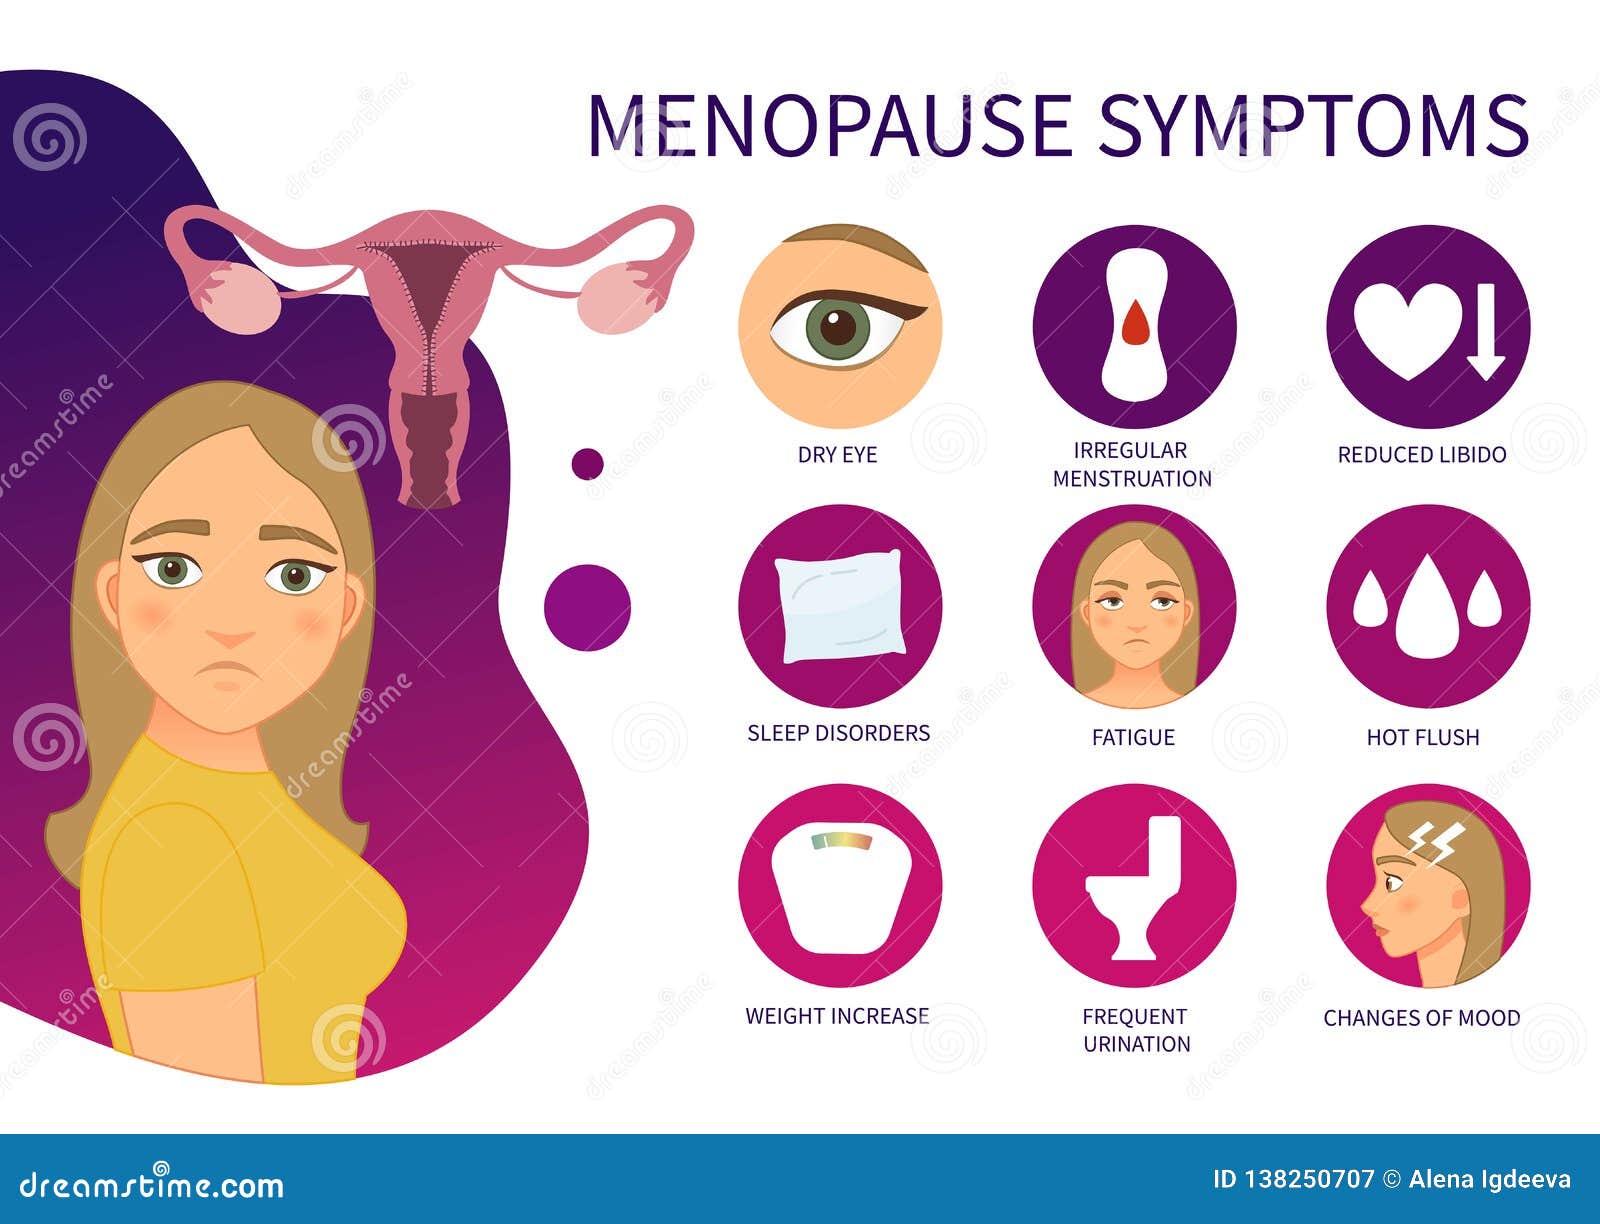 Menopause perimenopause changes midliferambler flashes symptom hormonal menstrual